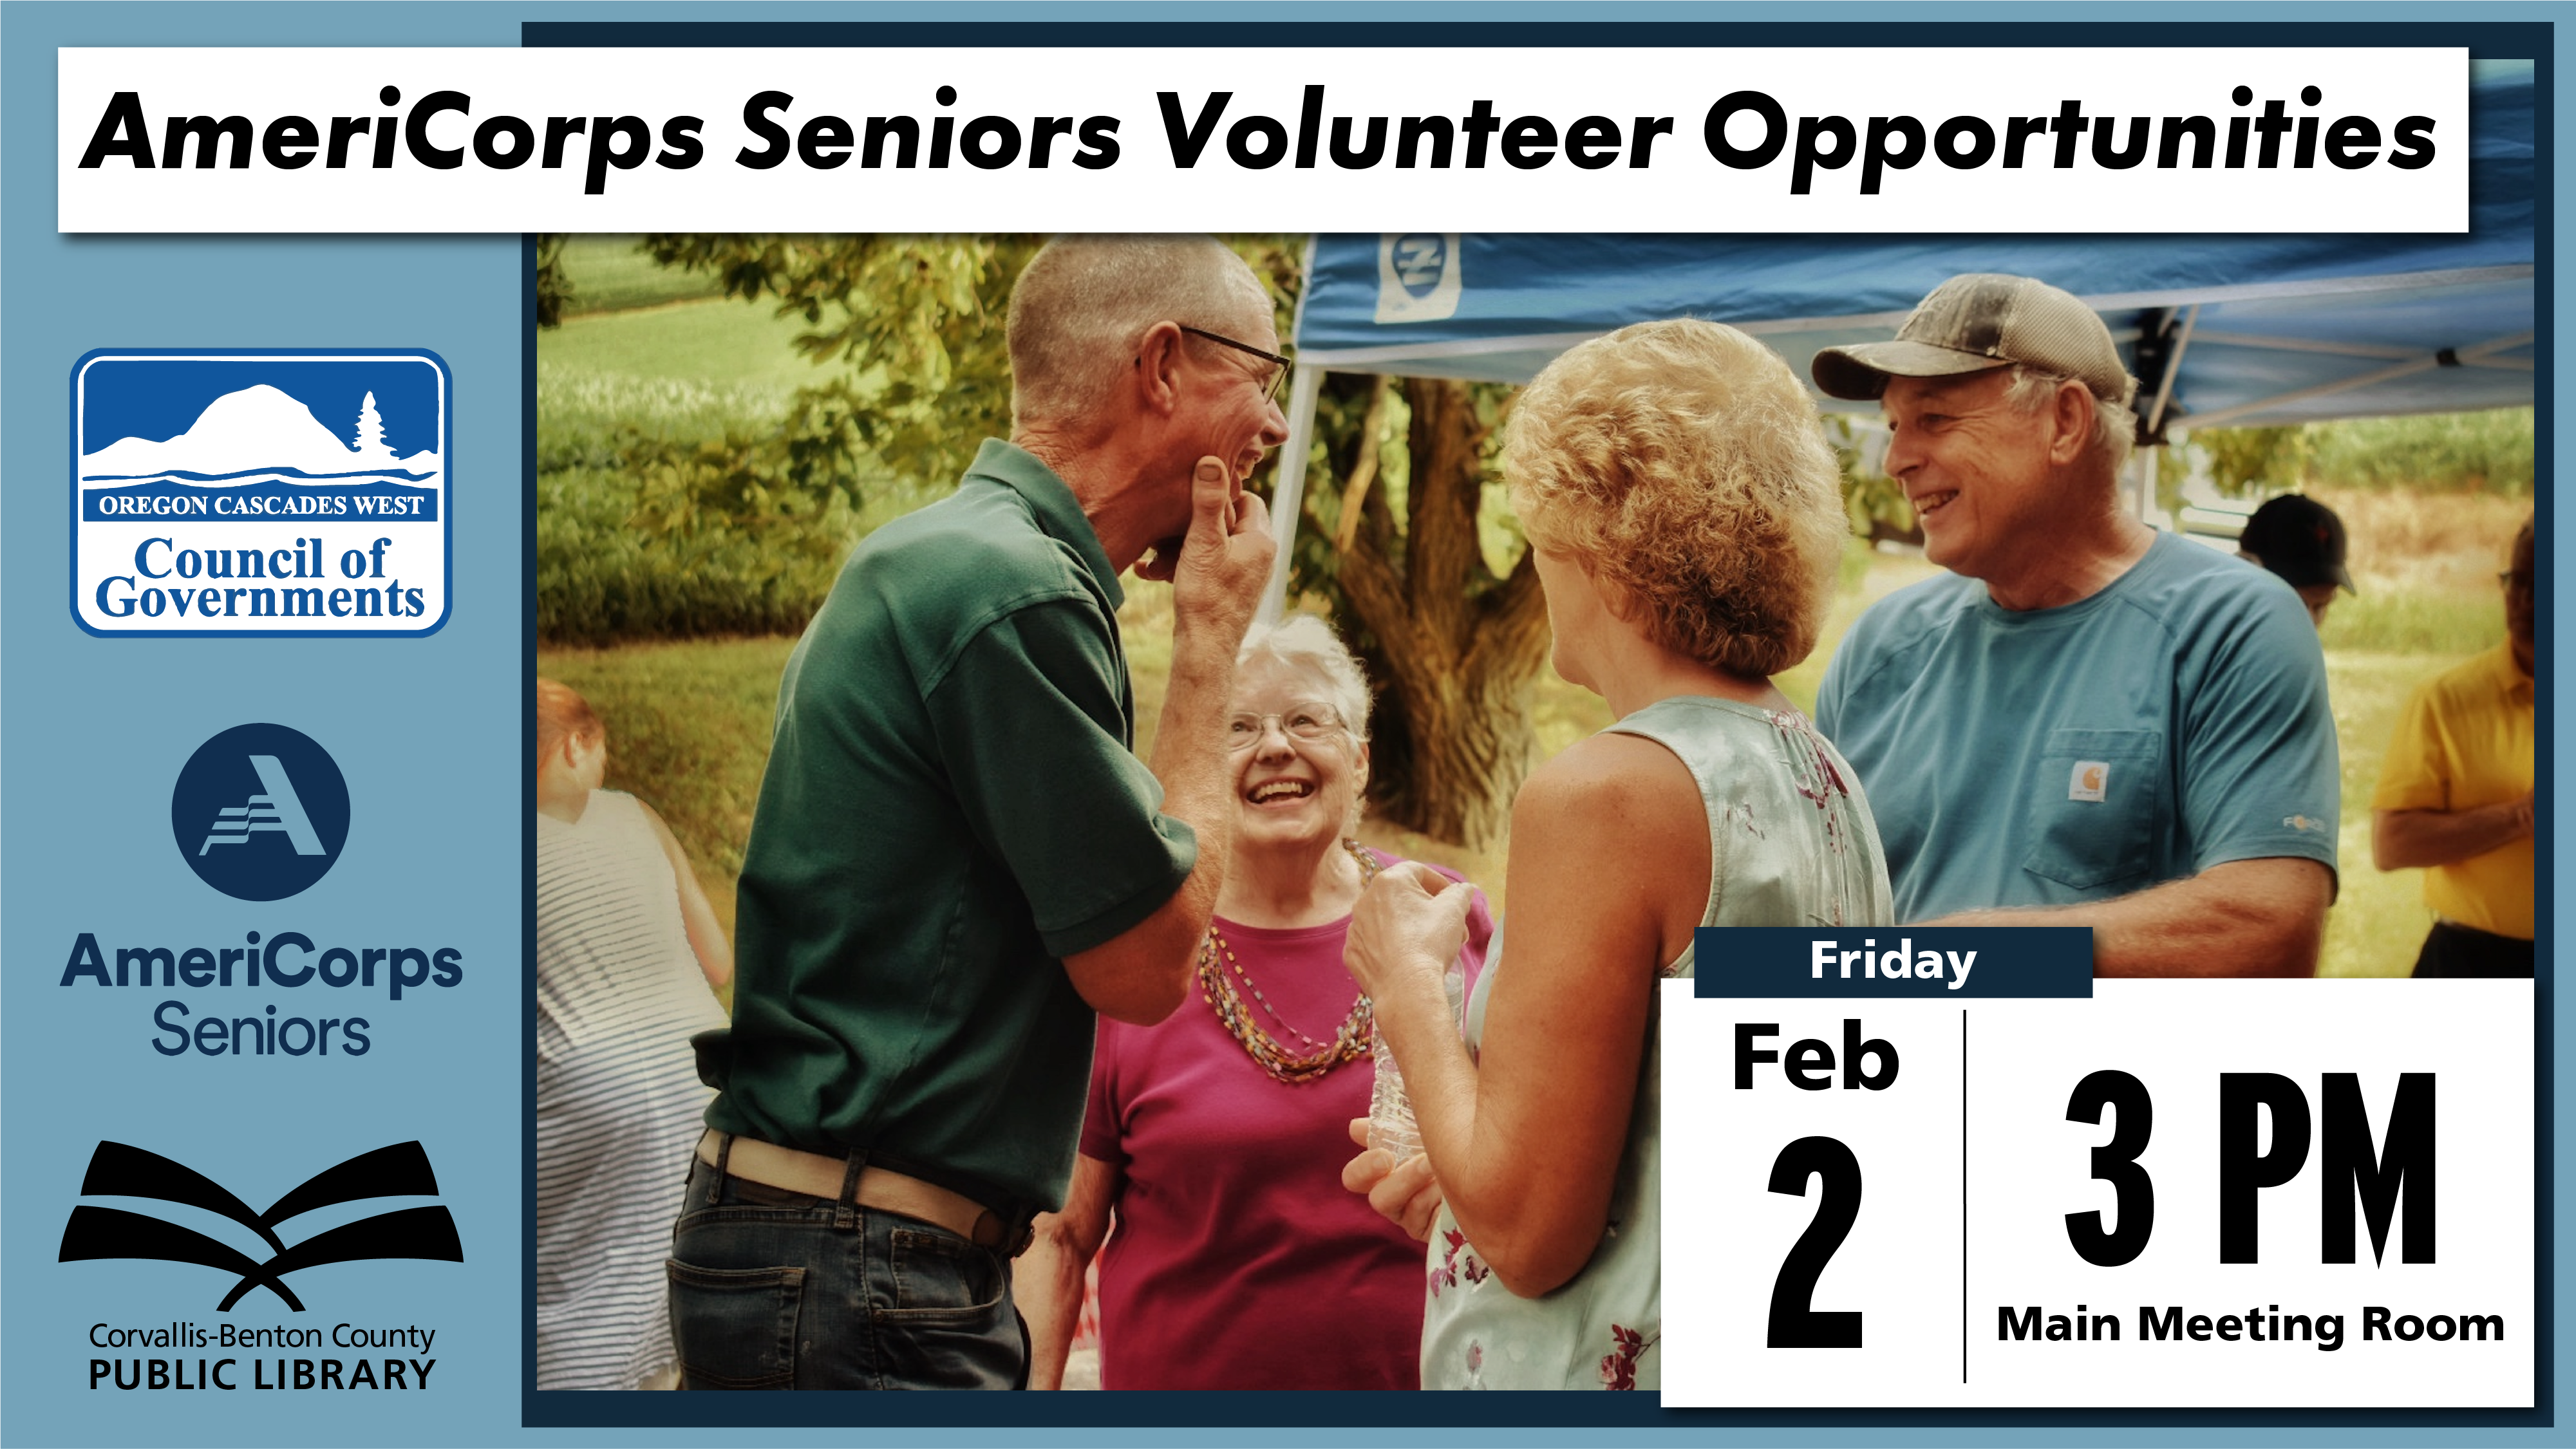 AmeriCorps Seniors Volunteer Opportunities, February 2, 3 PM, Main Meeting Room